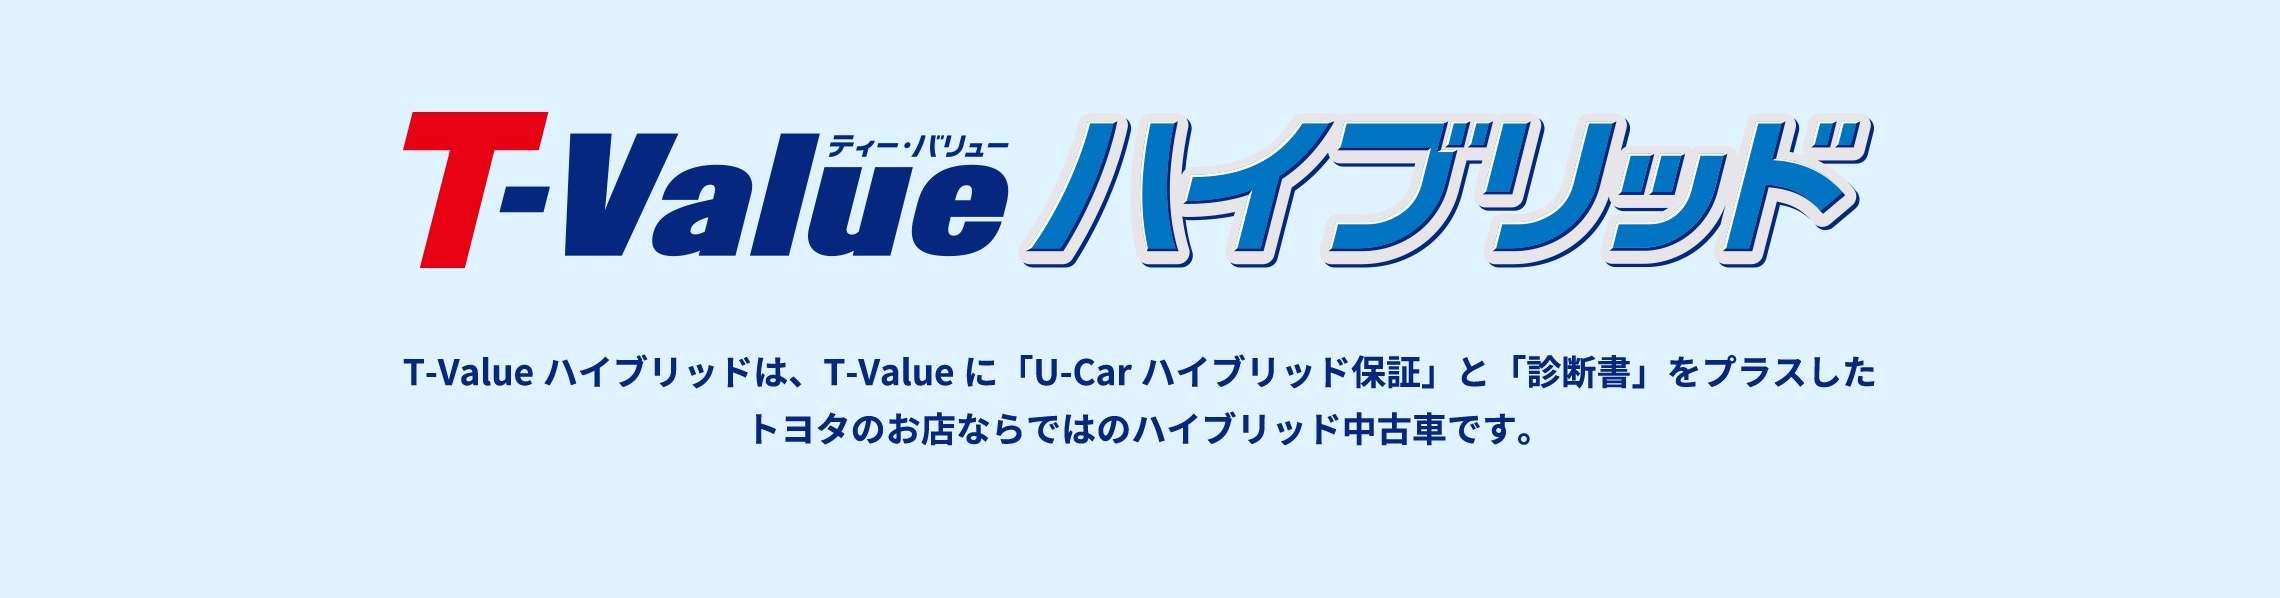 T Value ハイブリッド 中古車情報 U Car トヨタカローラ香川株式会社